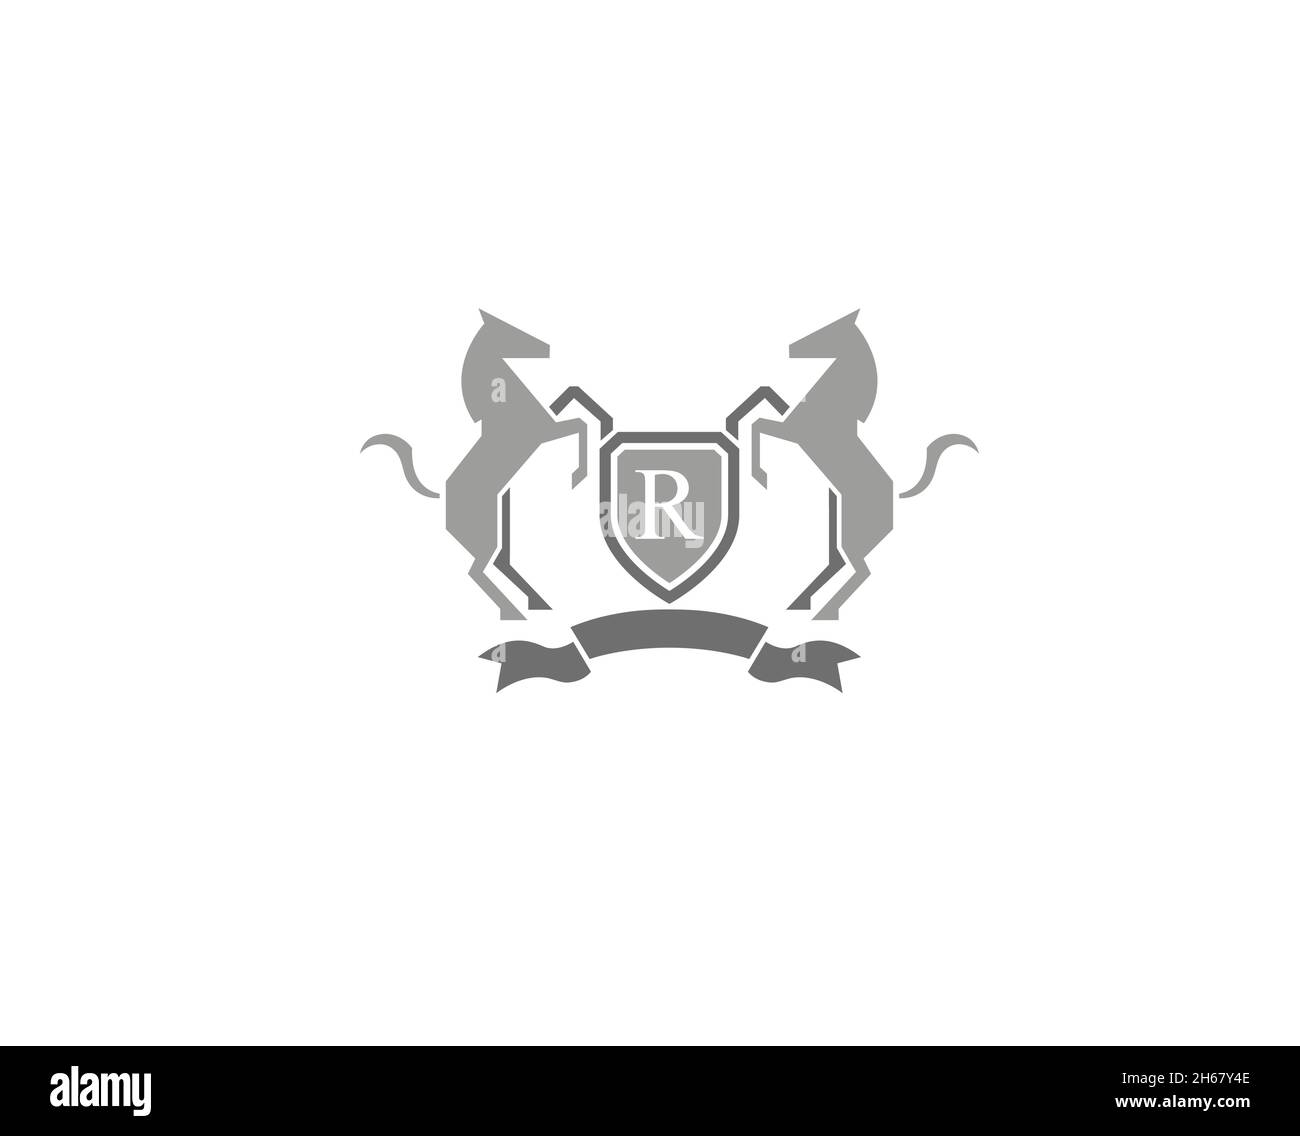 creative heraldic horse shield logo Vector Symbol Icon Design Illustration Stock Vector